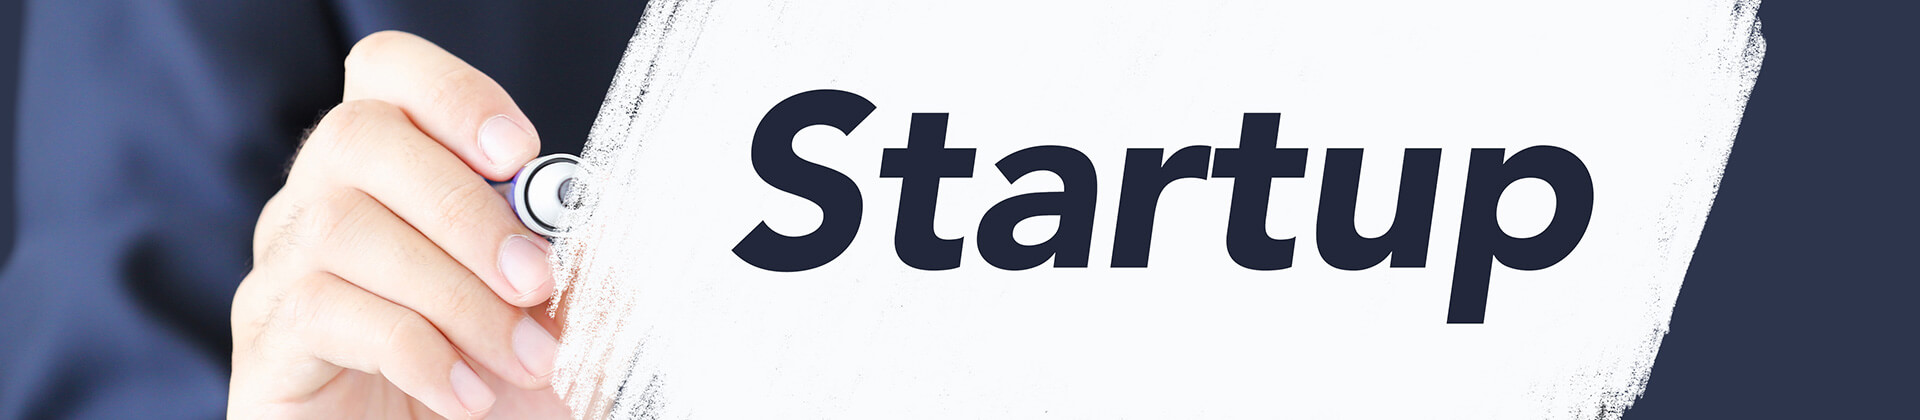 Startup sign